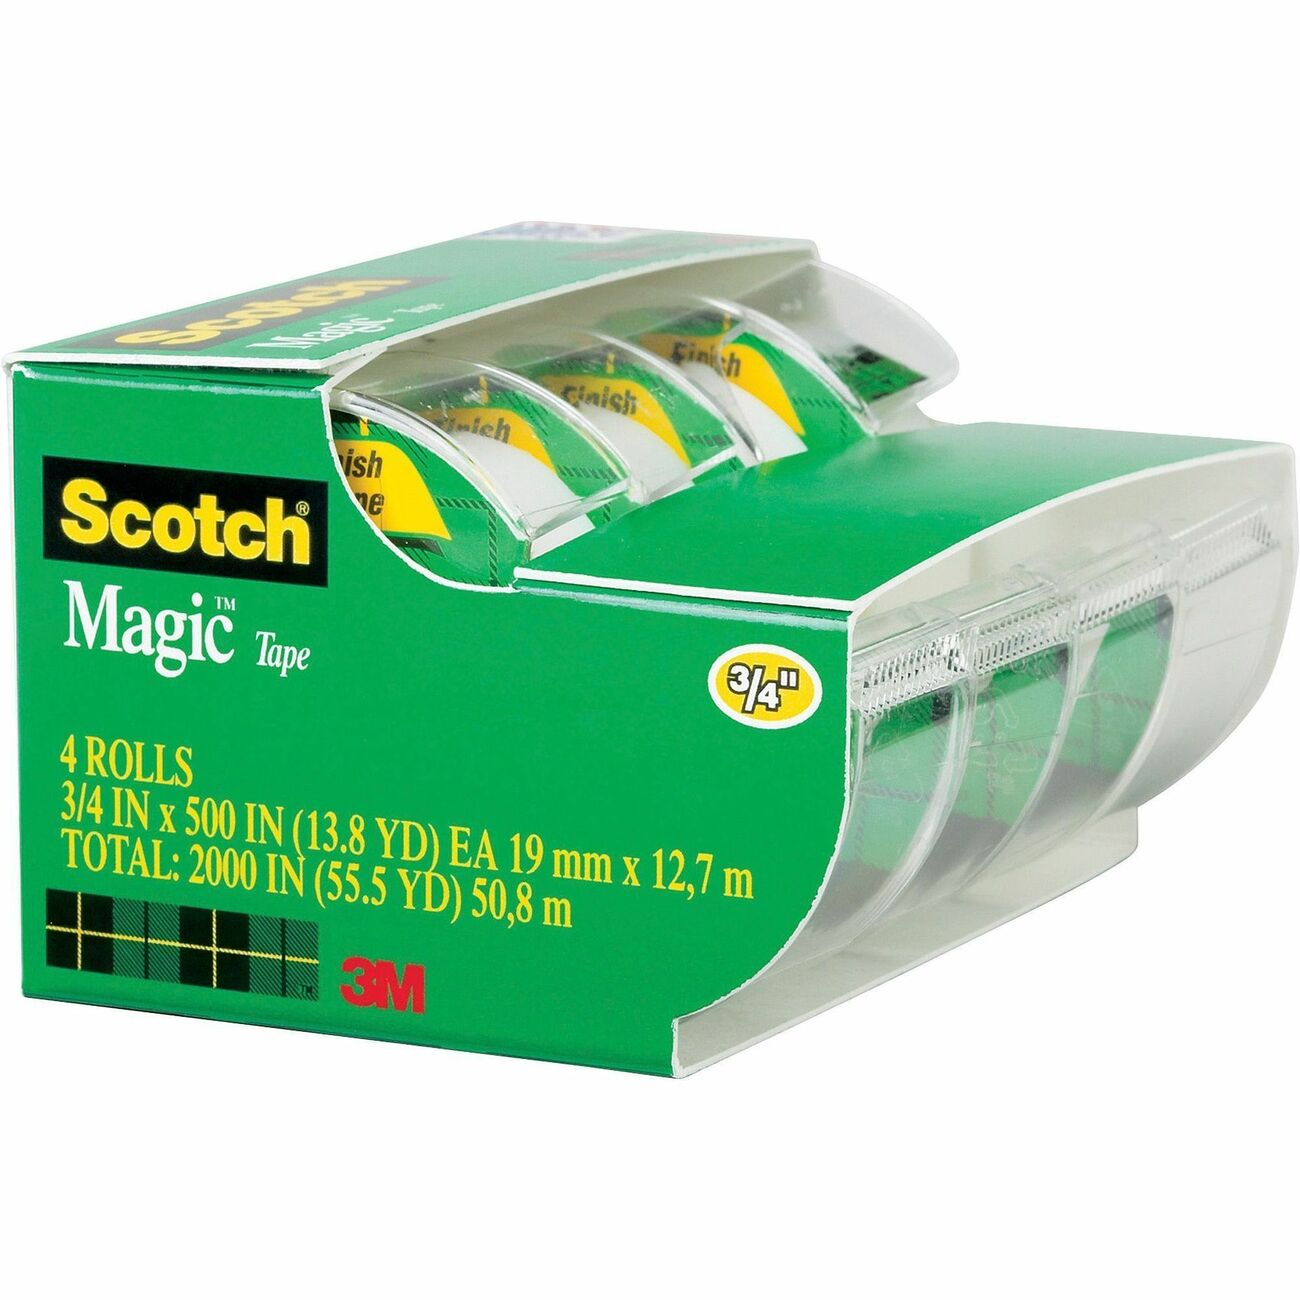 Scotch Nonyellowing Magic Tape Dispenser - 25 ft Length MMM4105